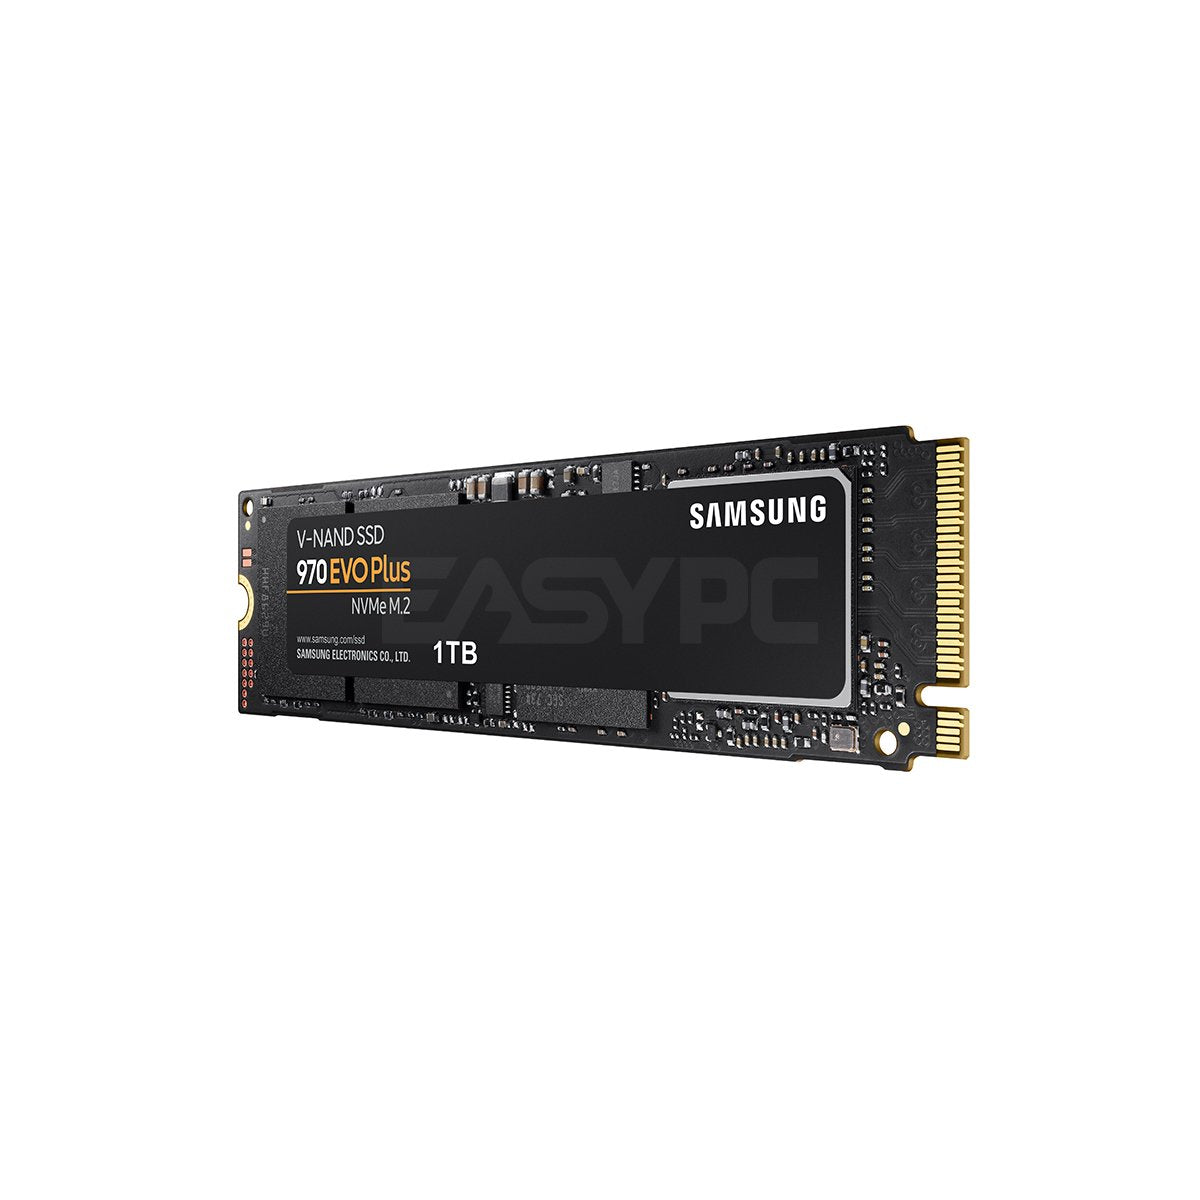 Samsung Evo Plus 970 2TB SSD PCIe NVMe M.2 Internal Solid State Drive –